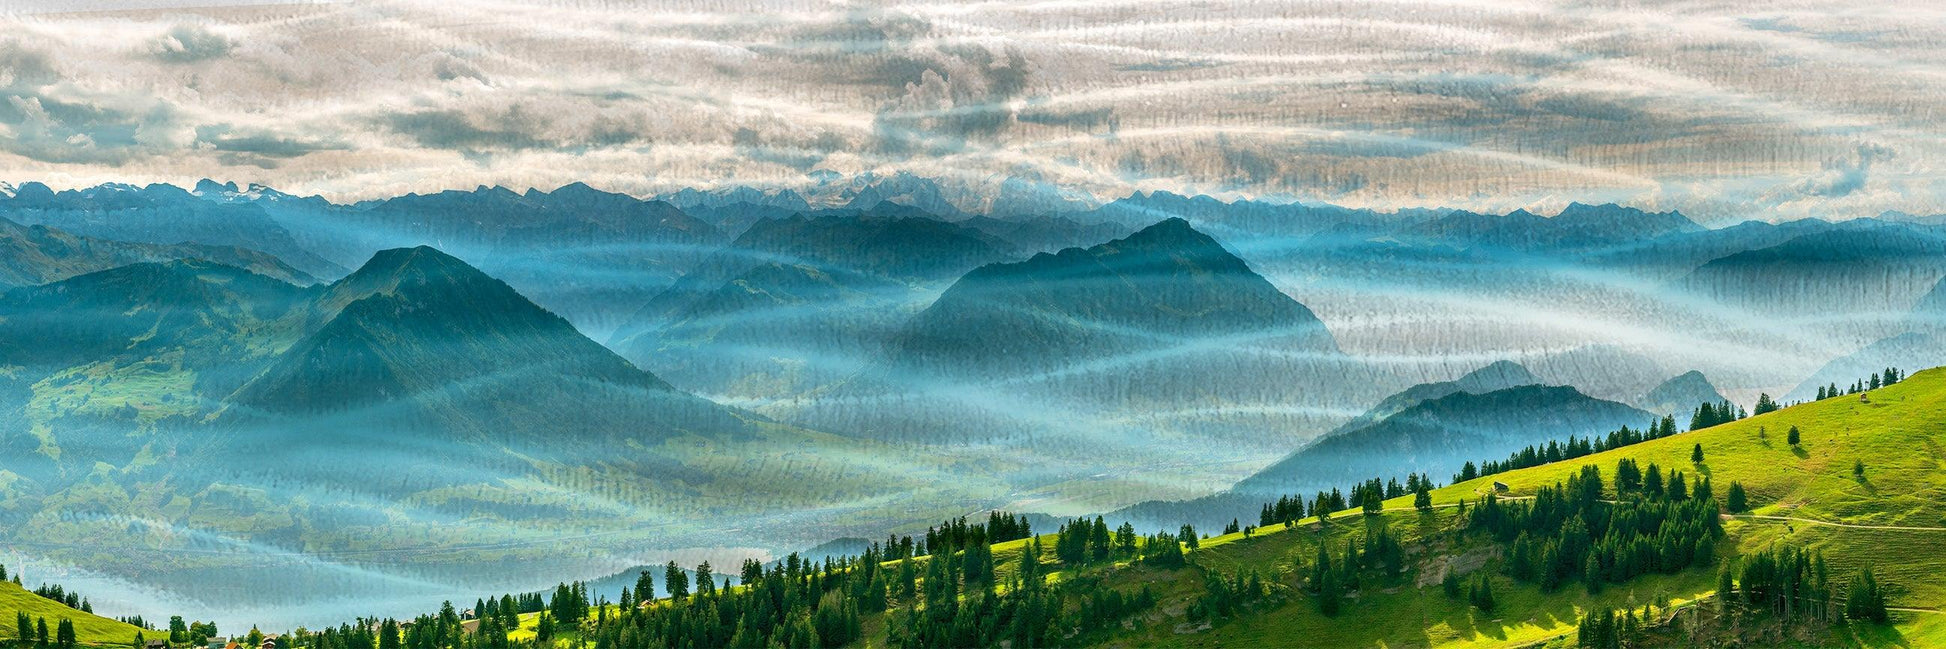 Scenery - Swiss Alps